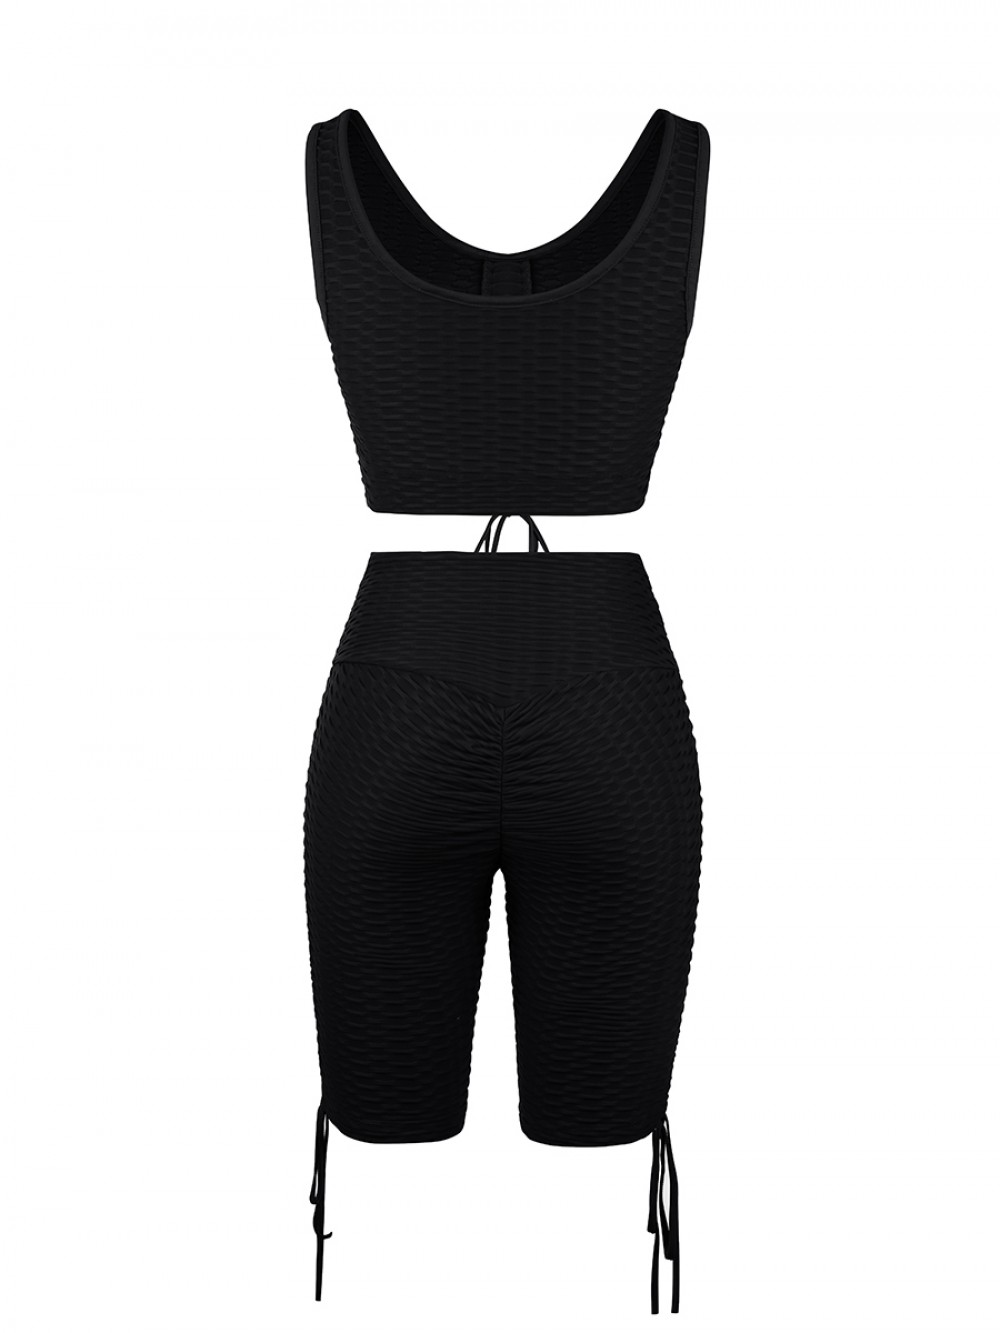 Black Drawstring Athletic Suit High Waist Workout Activewear